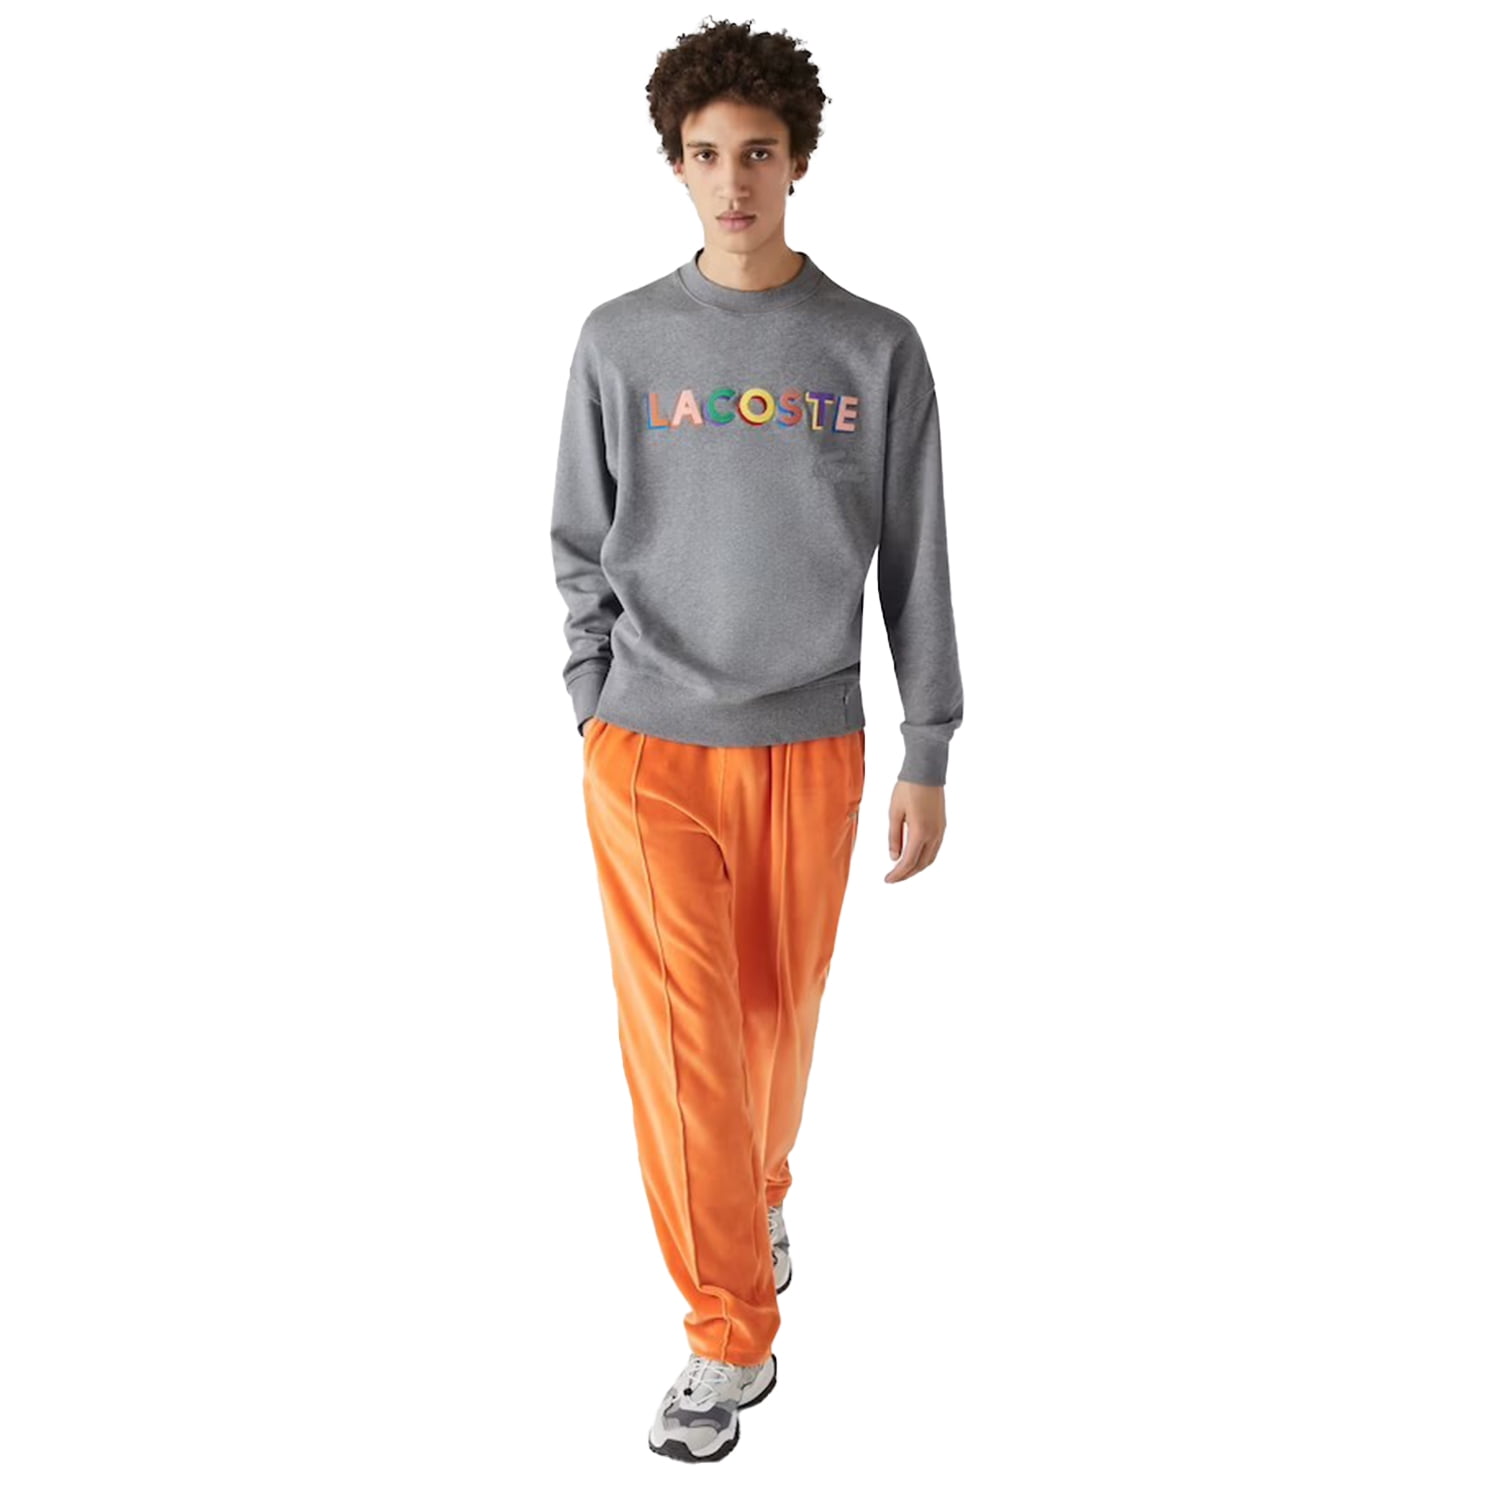 Lacoste Men's Crew Sweatshirt Grey Chine sh7277-51-1vq (Size L) -  